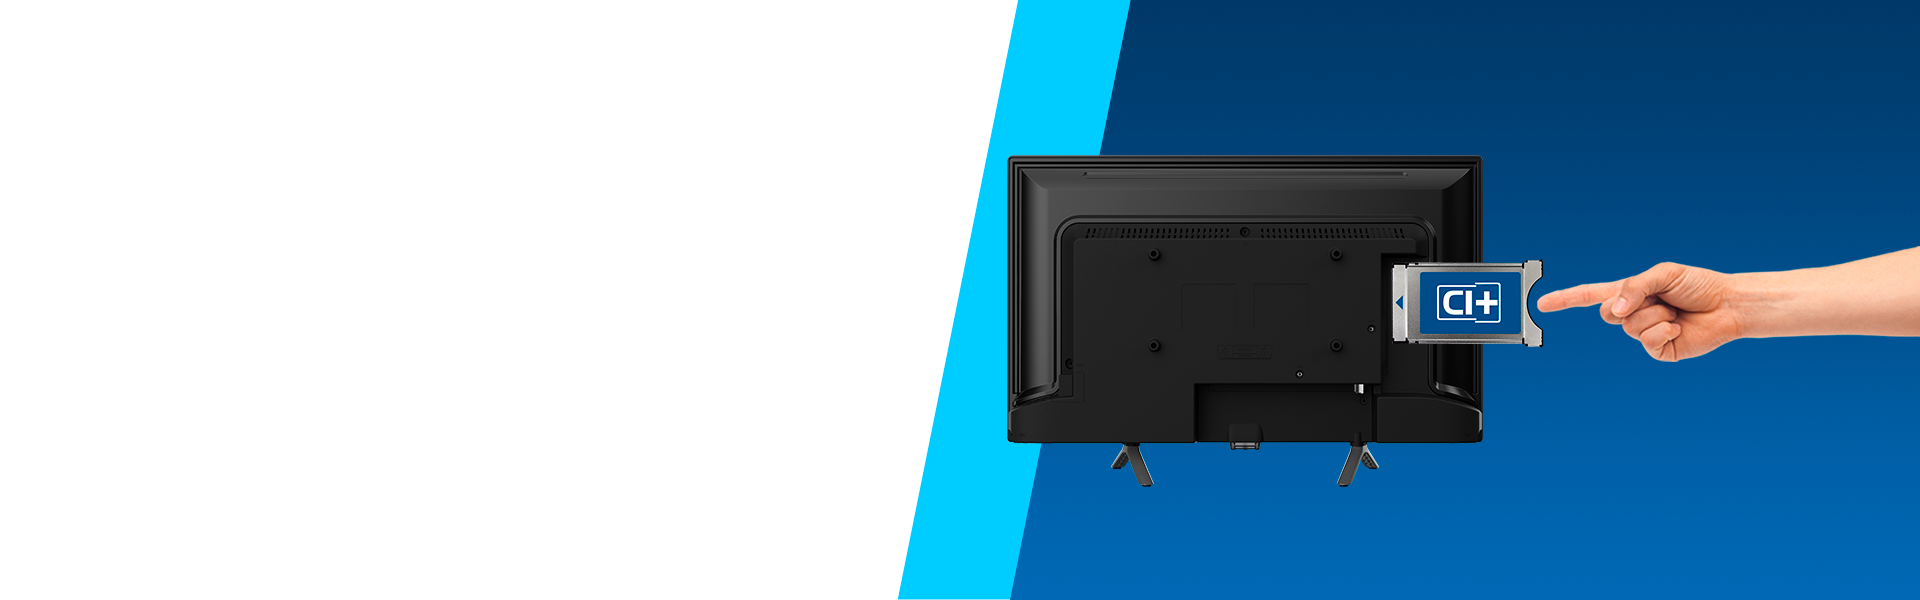 TV HD-Ready Smart TV LED Blaupunkt 24HB5000